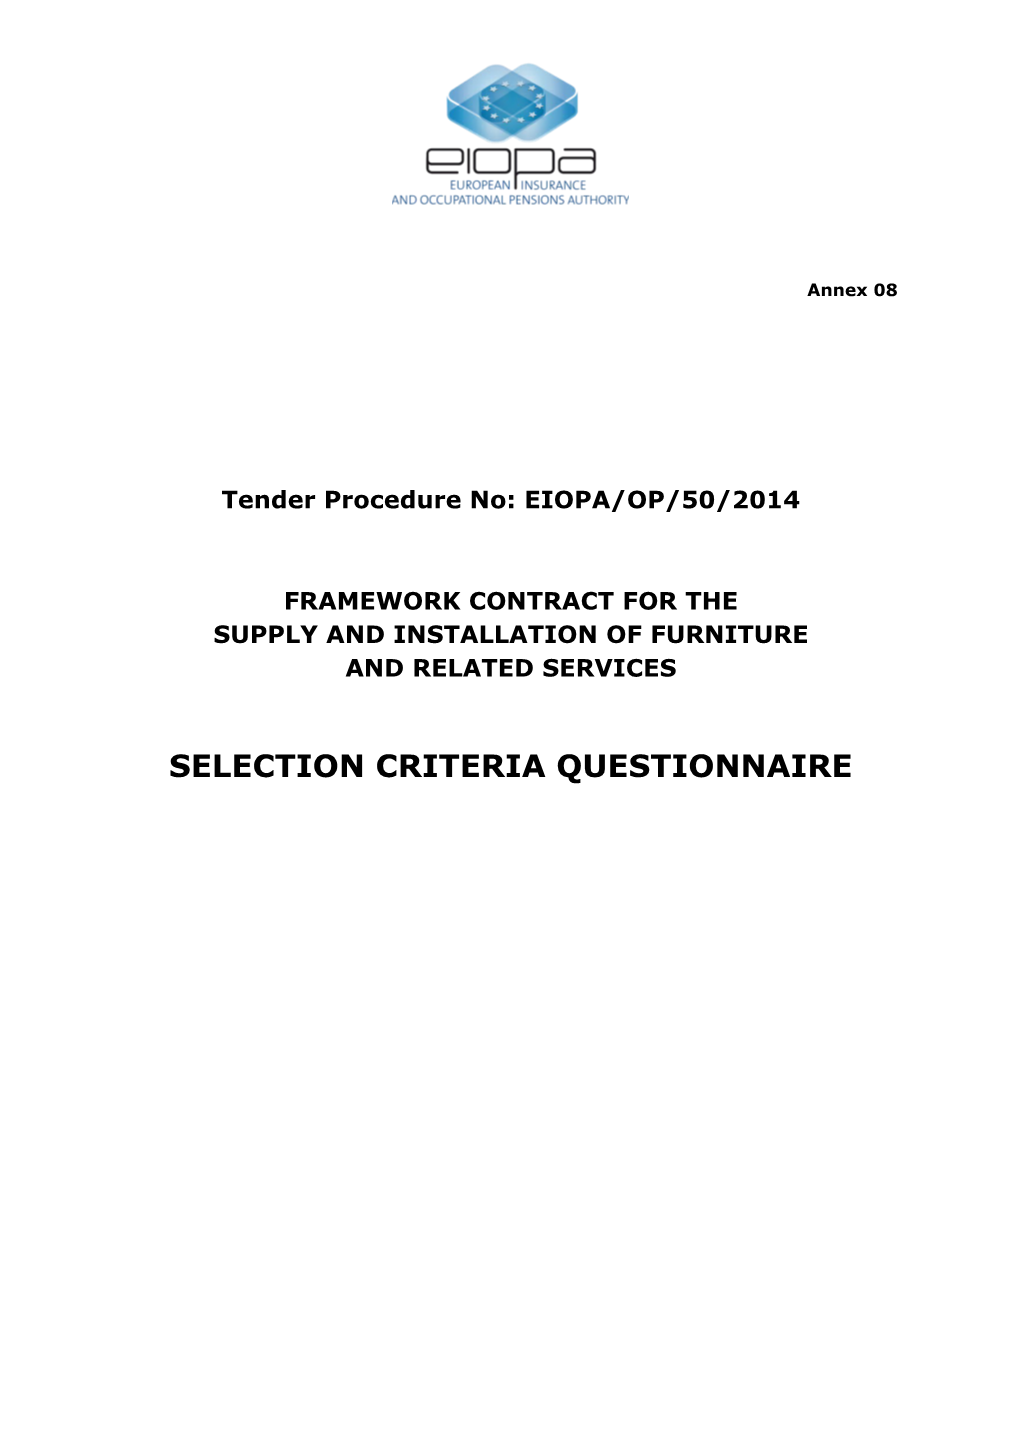 Annex 08 - Selection Criteria Questionnaire